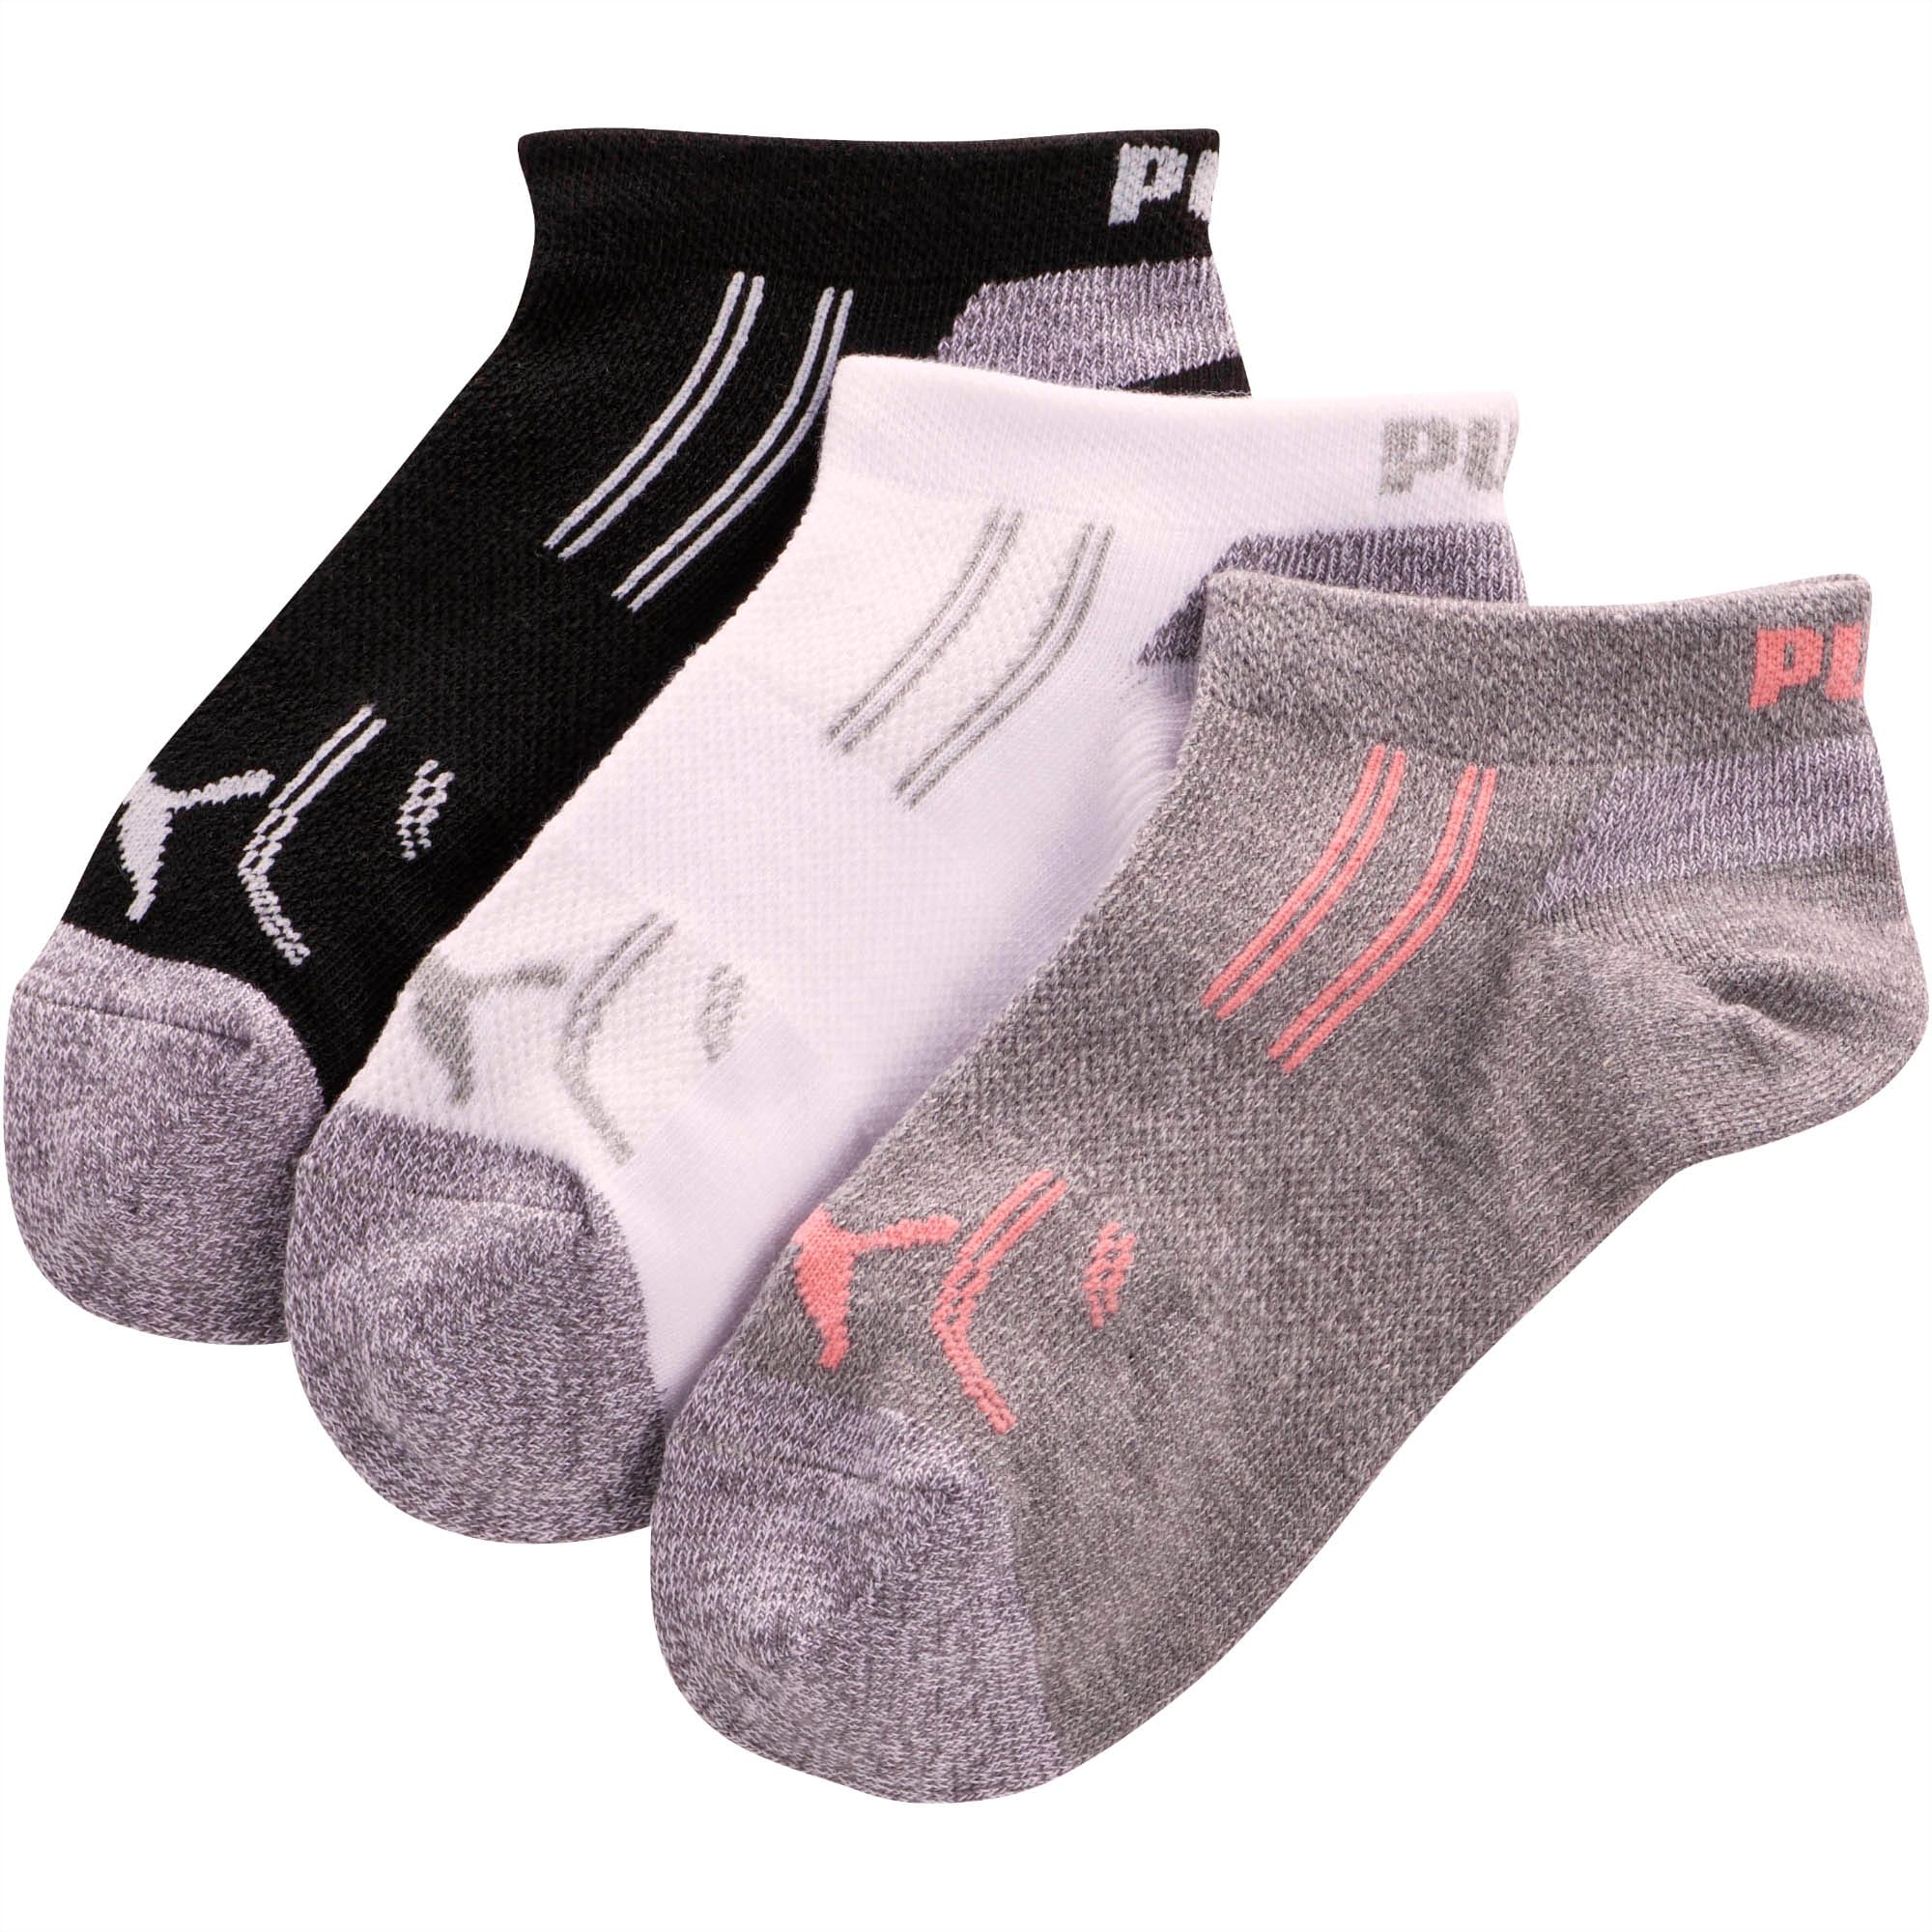 puma socks for girls